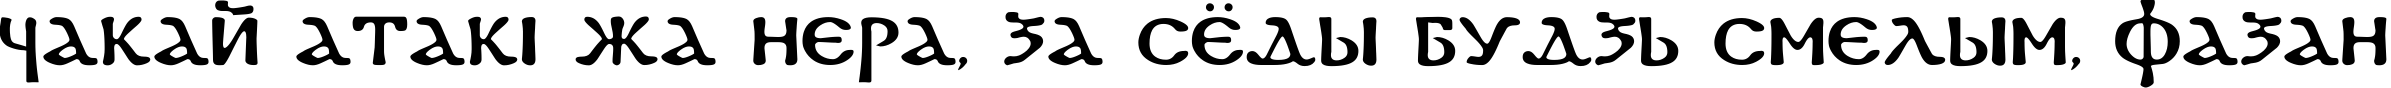 Пример написания шрифтом DS Coptic текста на белорусском